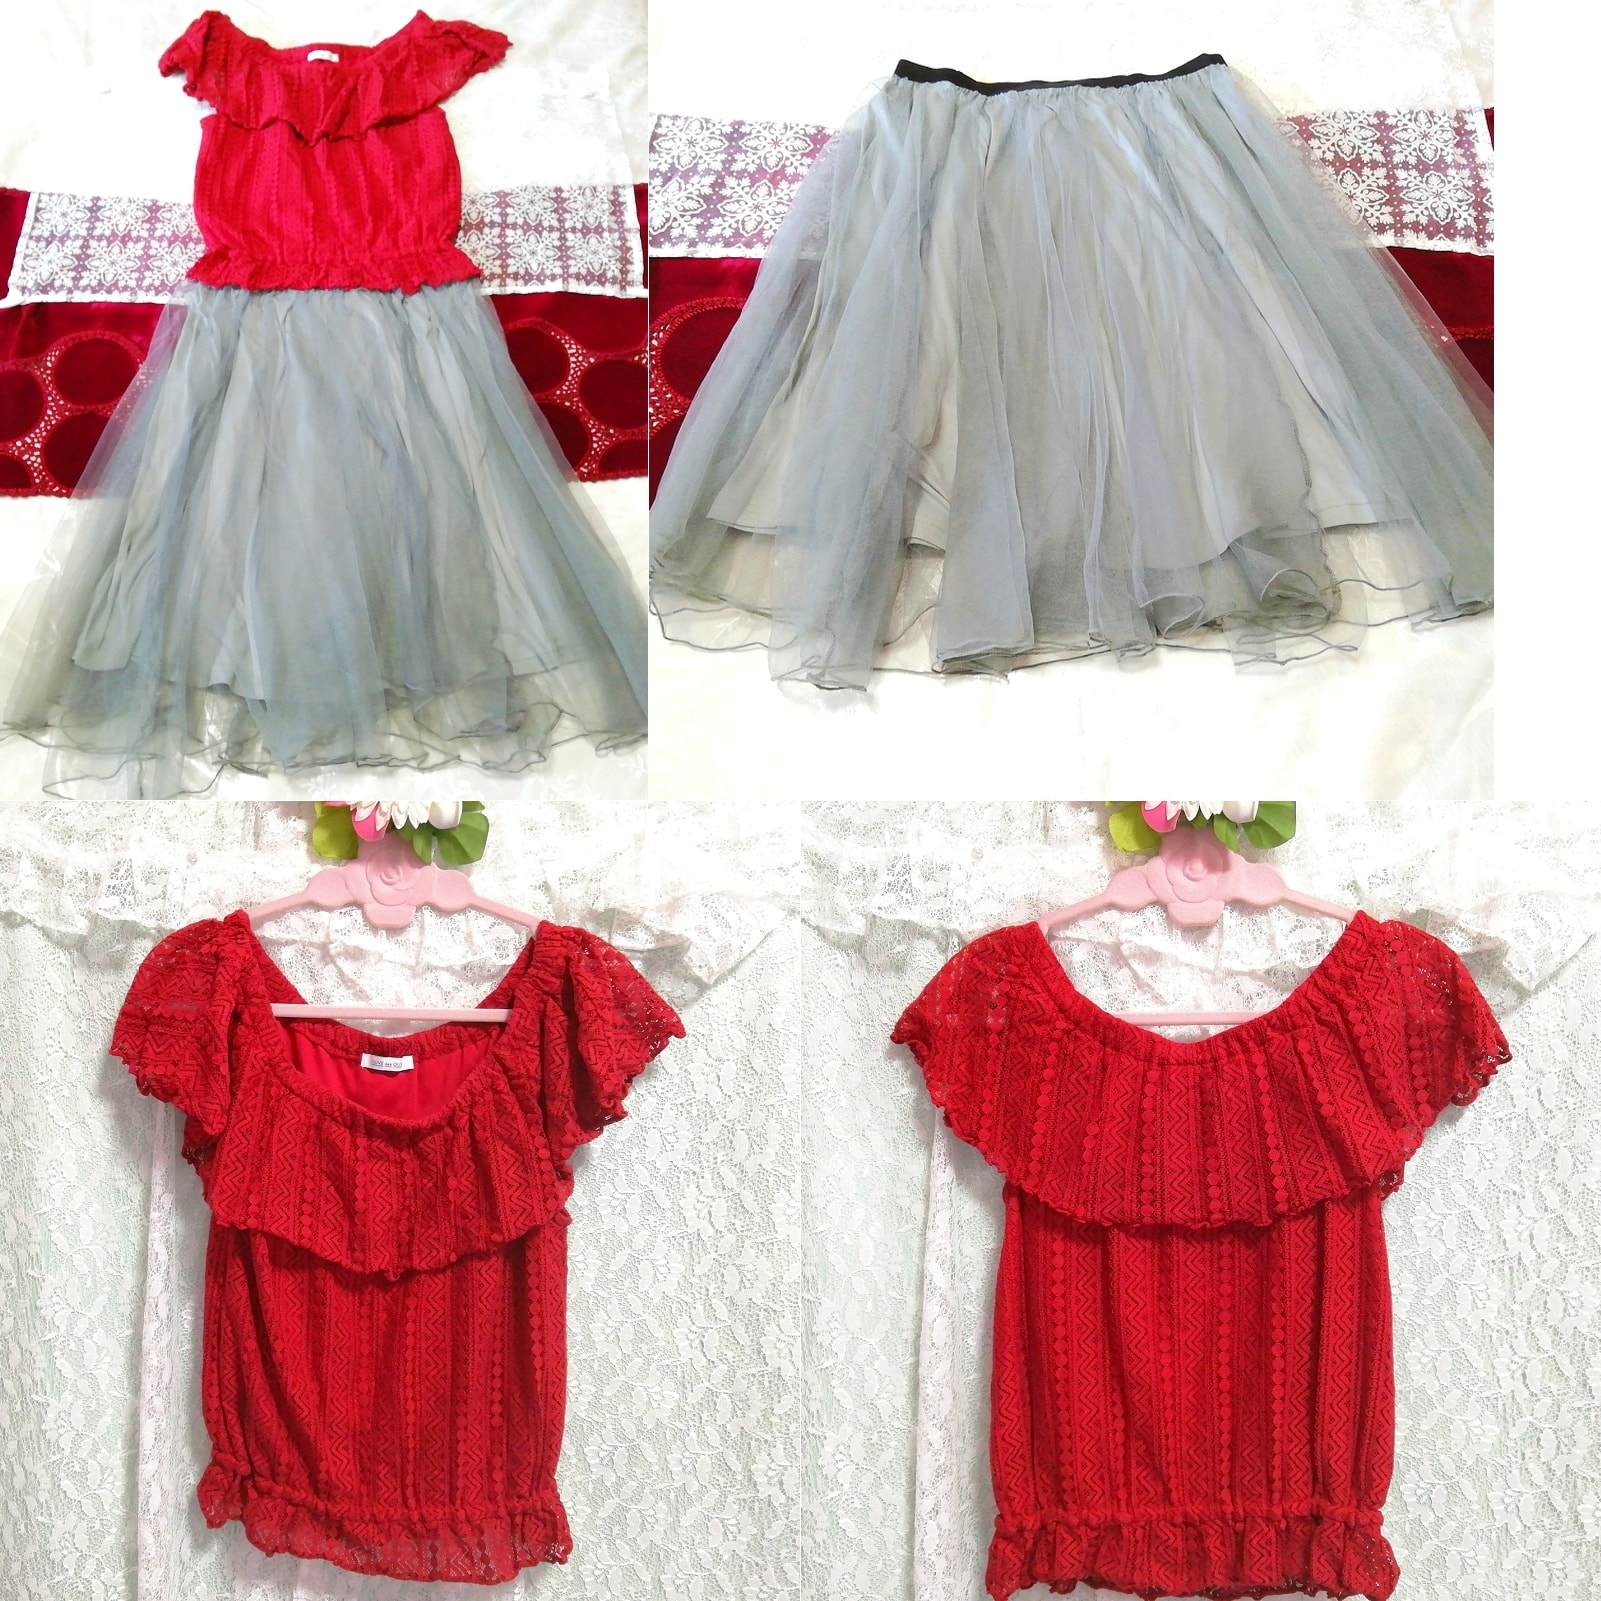 Rote Spitzen-Tunika, Negligé-Nachthemd, grauer Tüllrock, 2 Stück, Mode, Frauenmode, Nachtwäsche, Pyjama